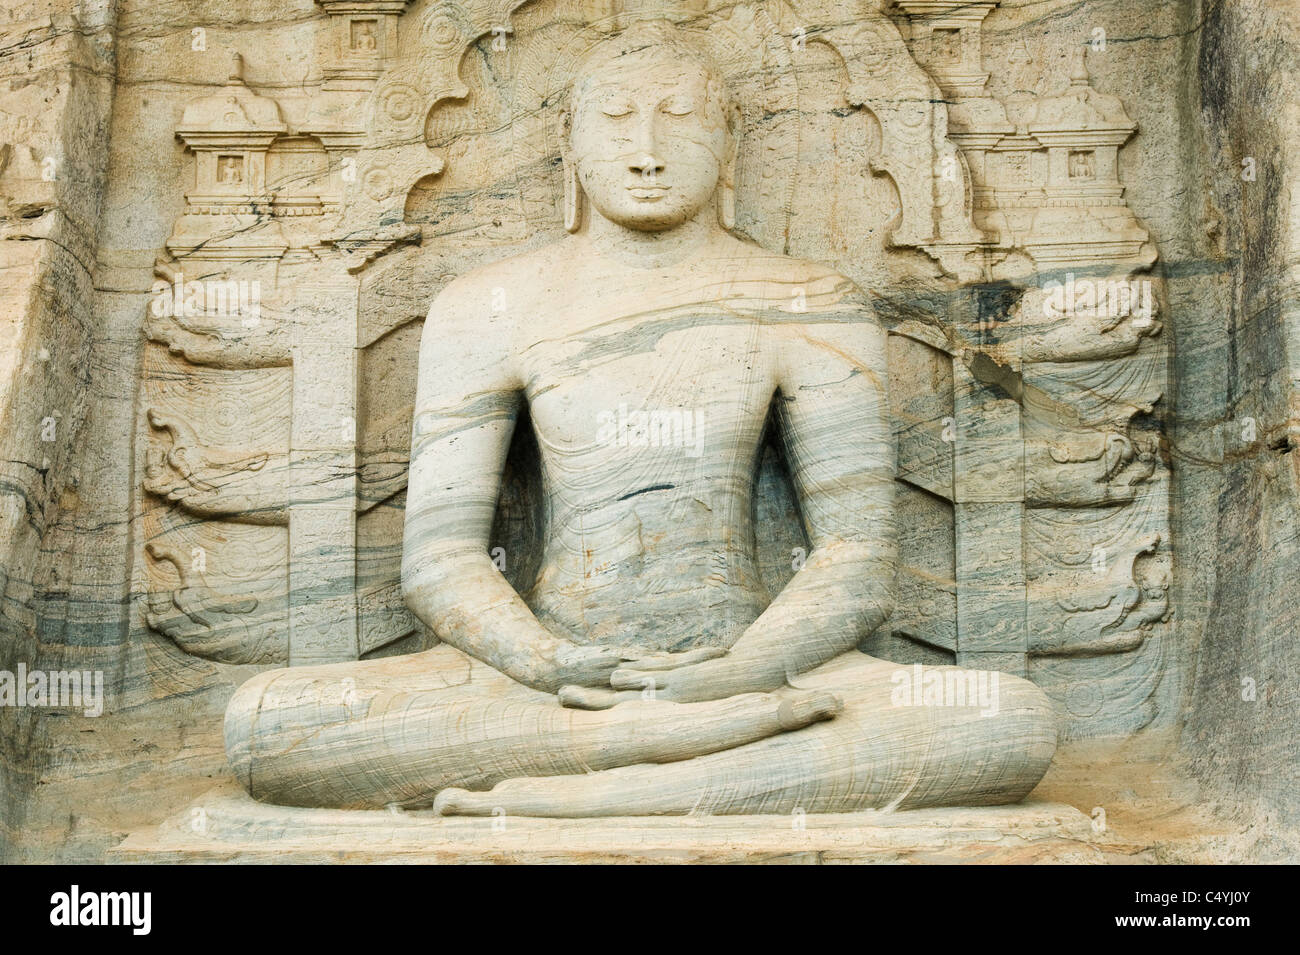 Stein Buddha, Gal Vihara, Polonnaruwa, Sri Lanka-UNESCO-Welterbe. Stockfoto